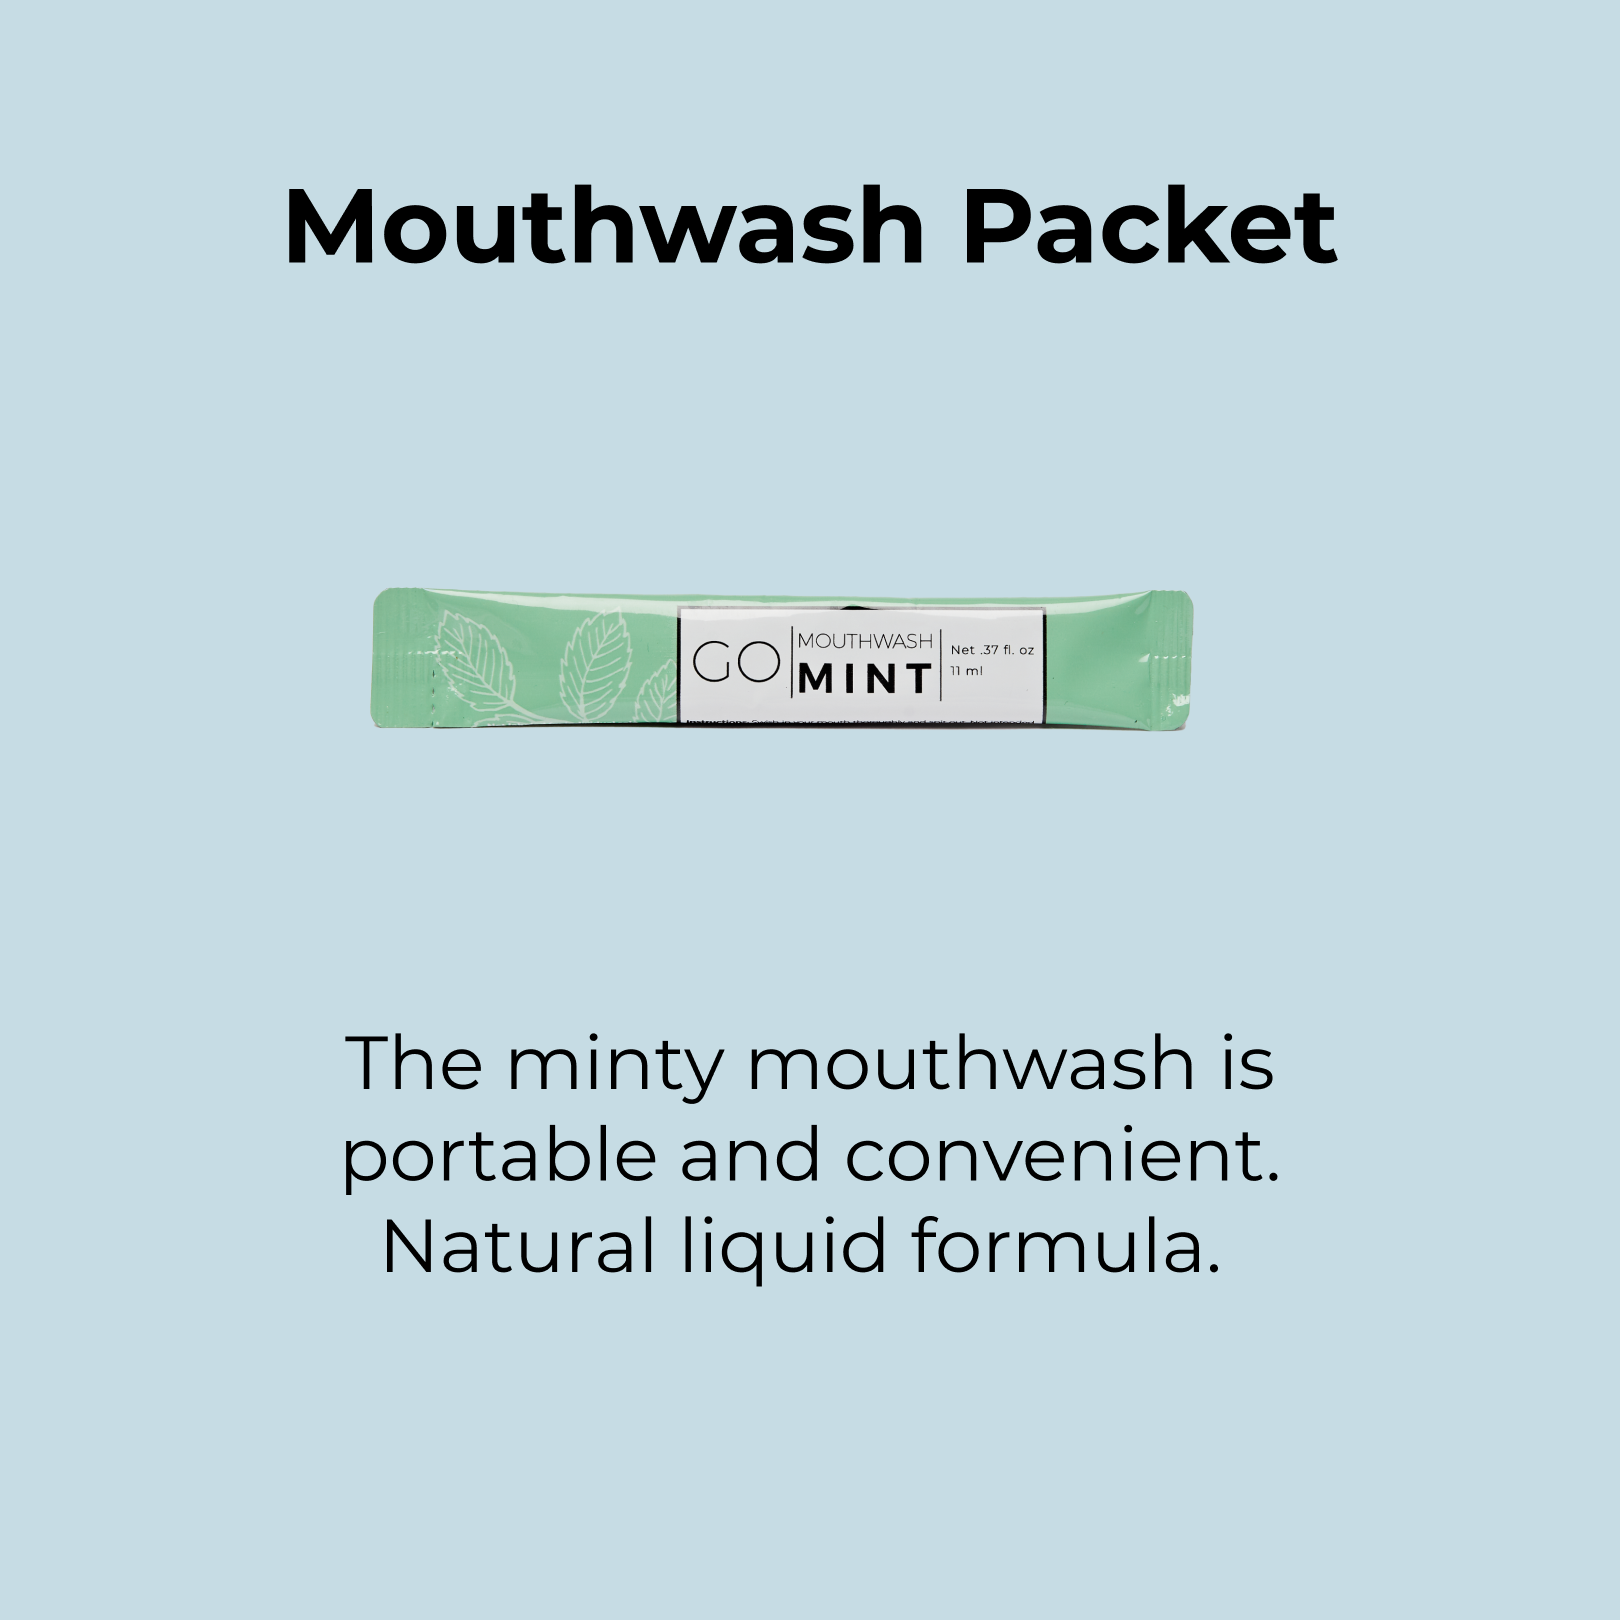 Mouthwash Packet